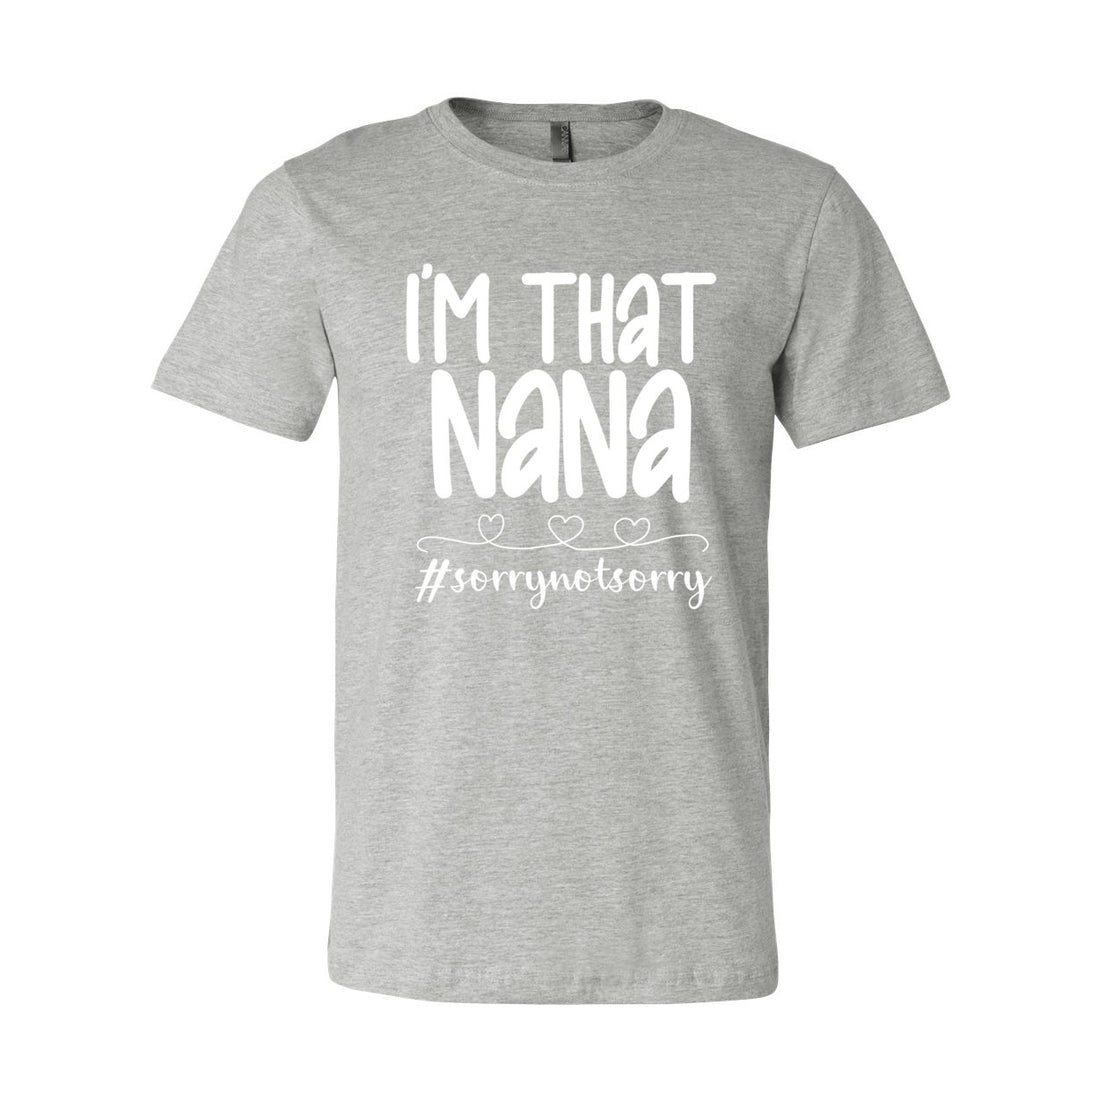 I'm That Nana Short Sleeve Jersey Tee - T-Shirts - Positively Sassy - I'm That Nana Short Sleeve Jersey Tee